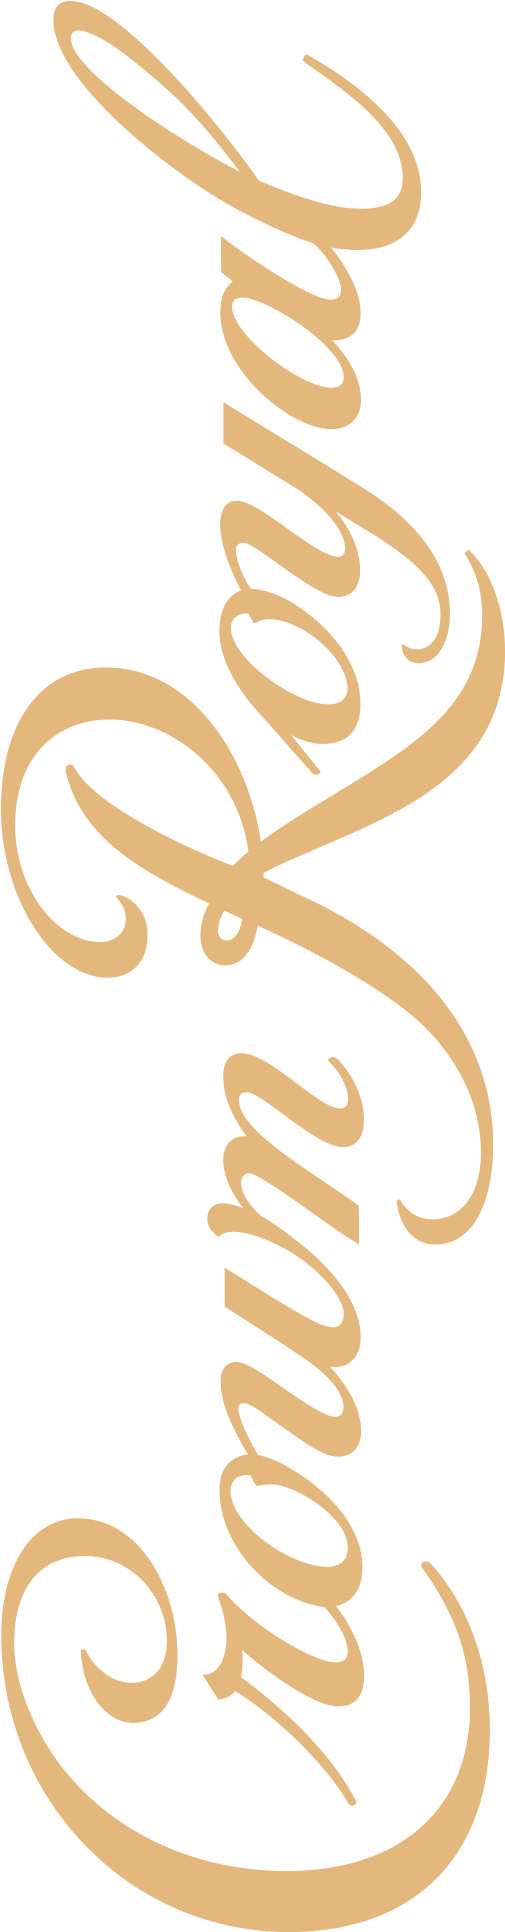 Crown Royal Whisky Logo PNG